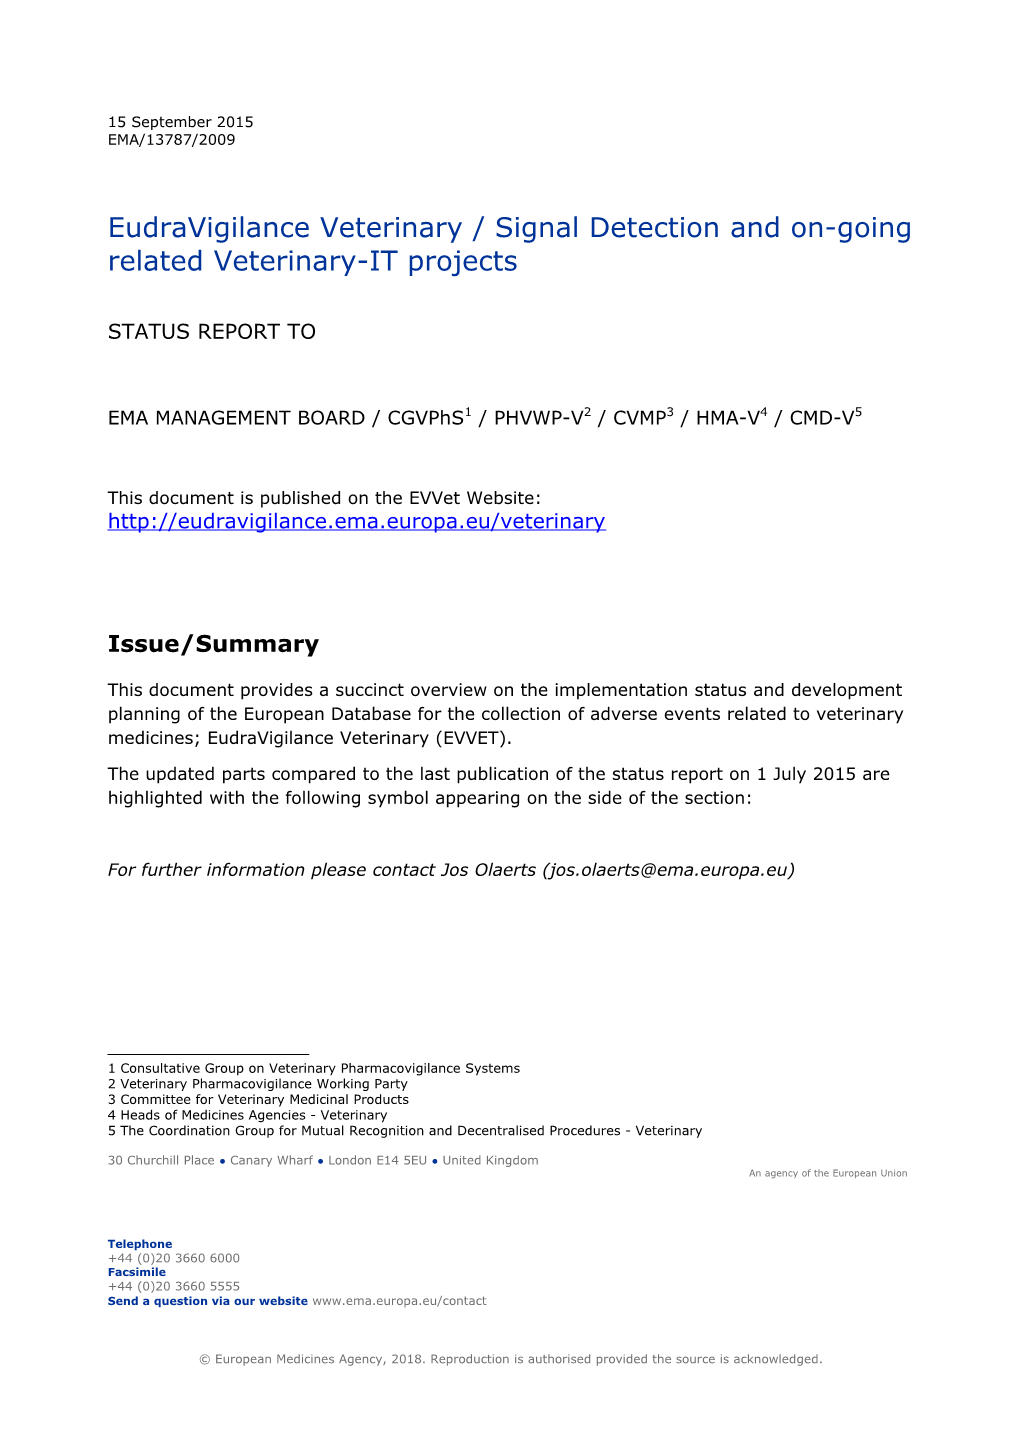 Eudravigilance - Veterinary Status Report